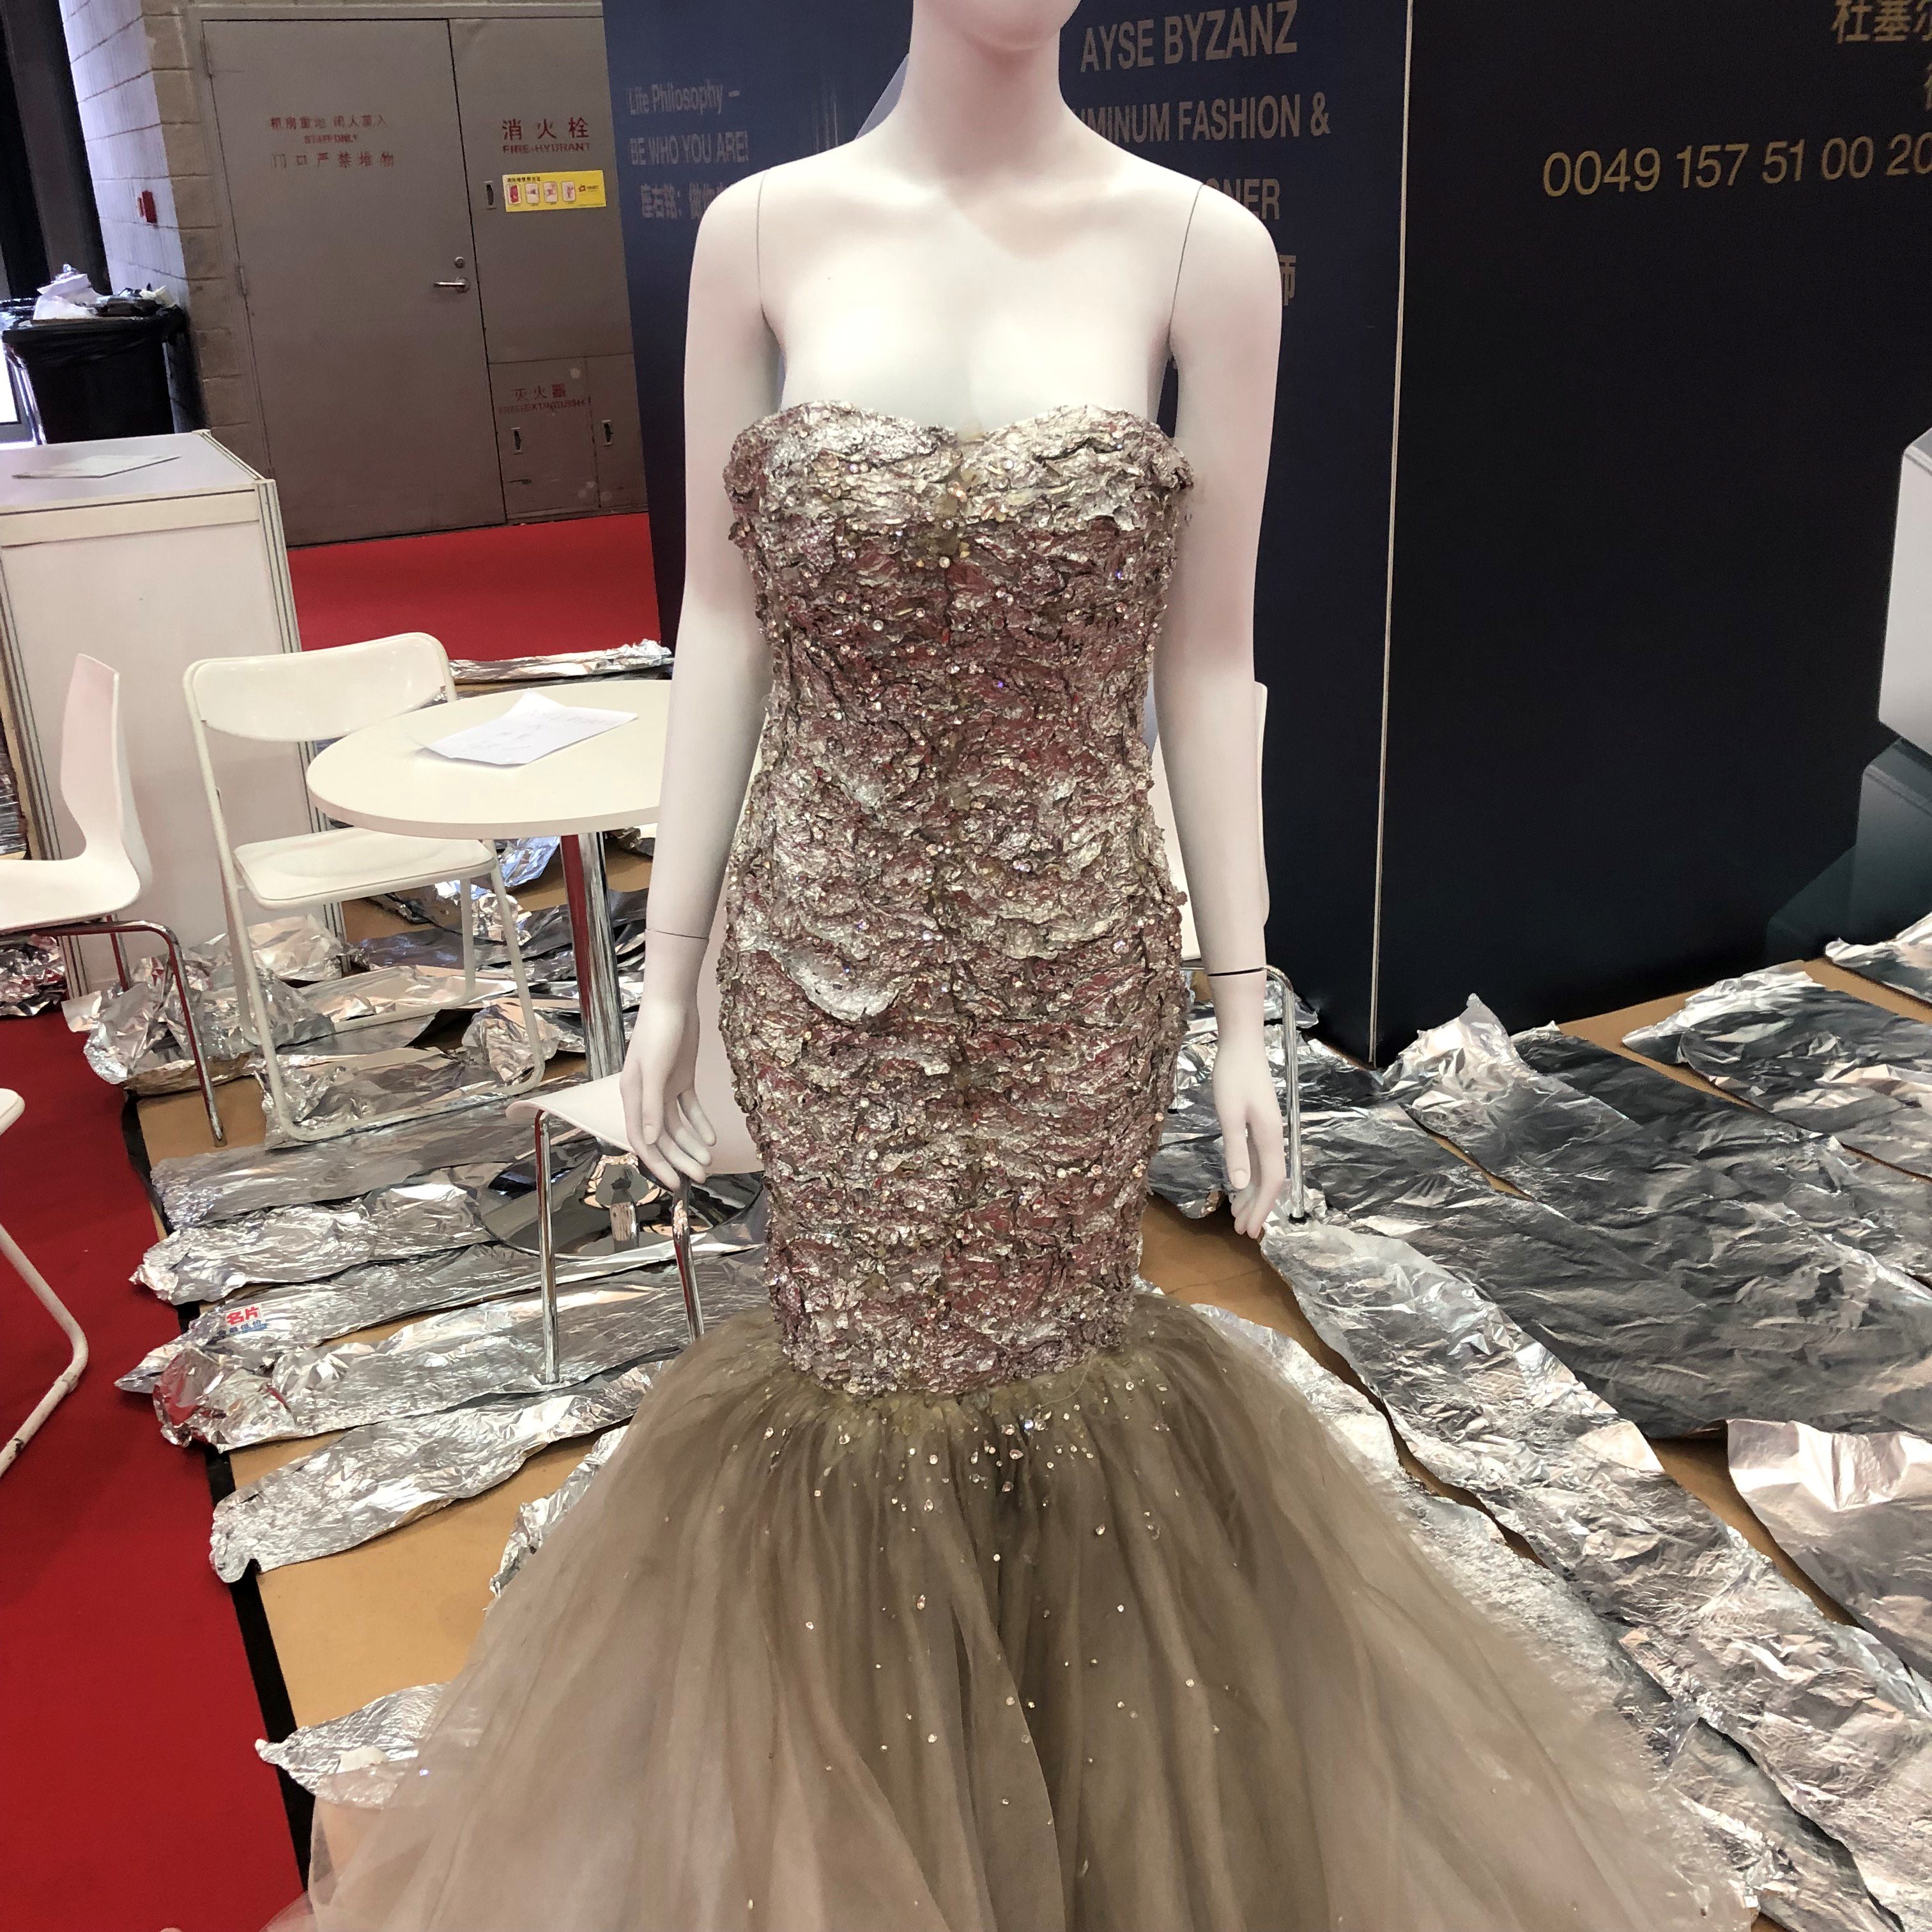 Aluminium wedding gowns by Ayse Bysanz on display at Düsseldorf Event, Alcircle News